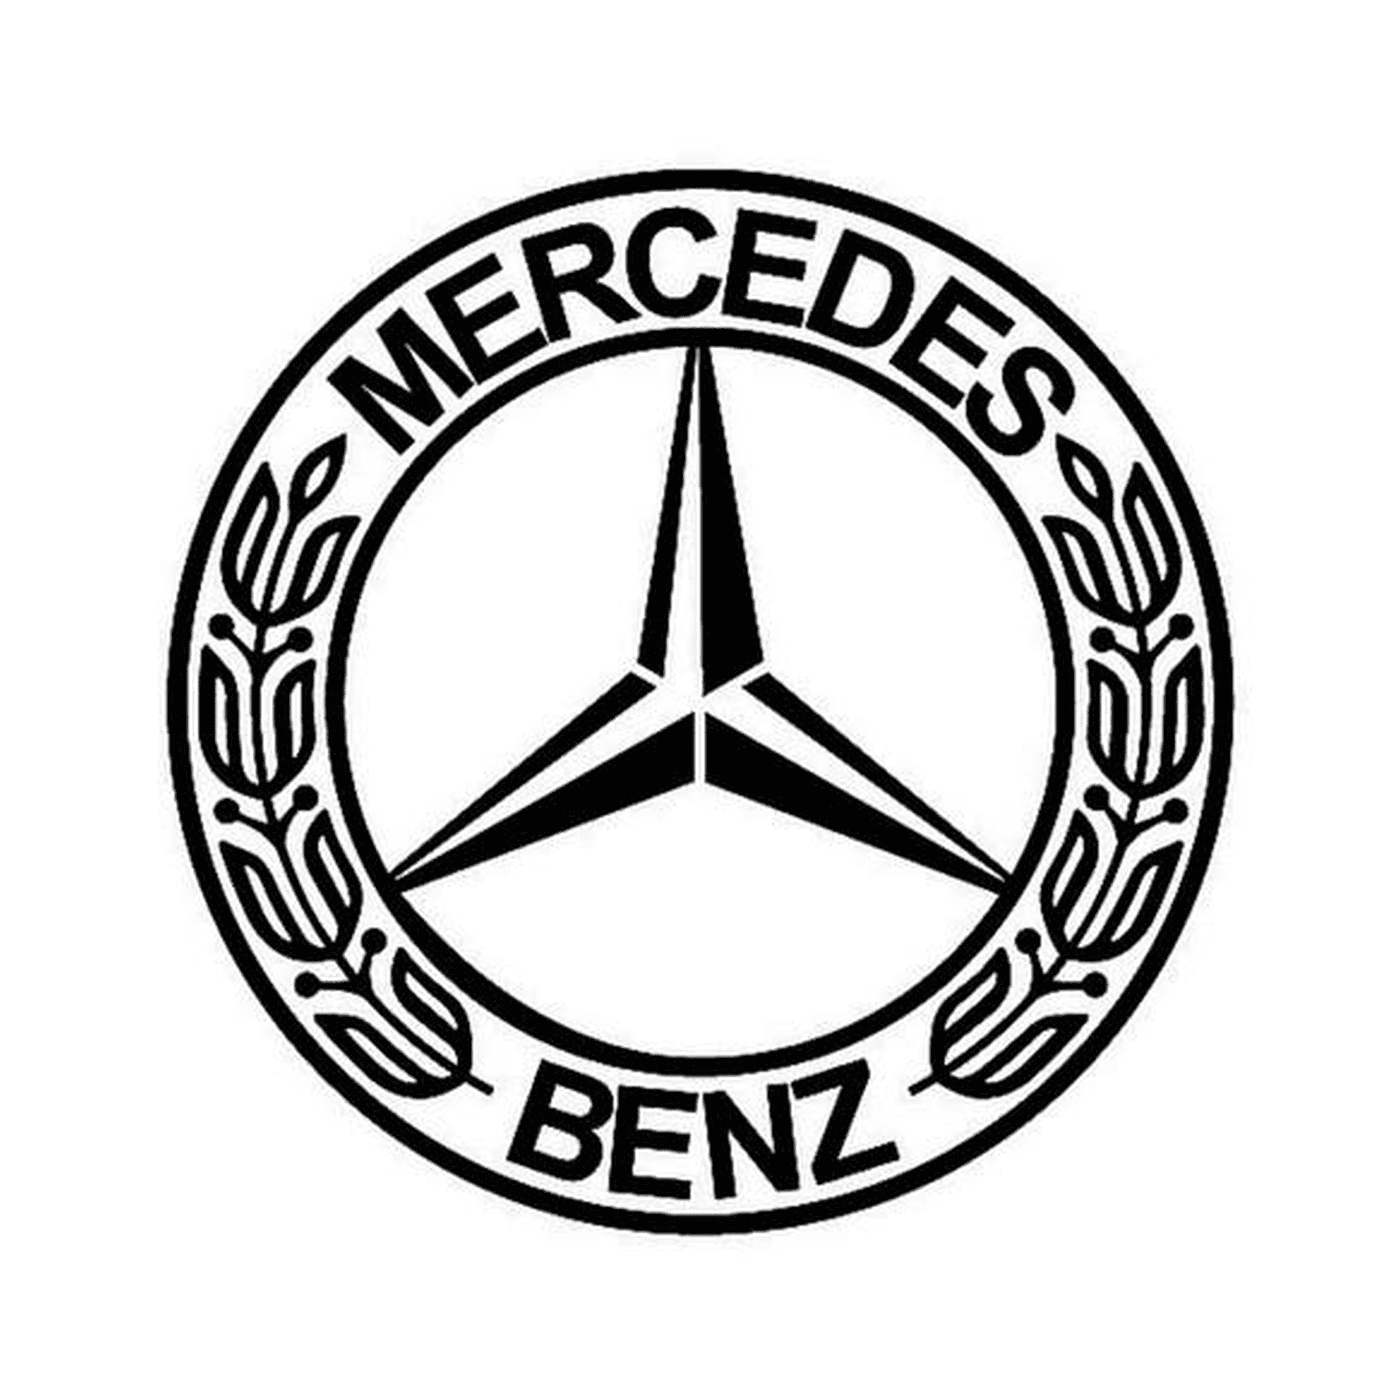  Logotipo distintivo de Mercedes 